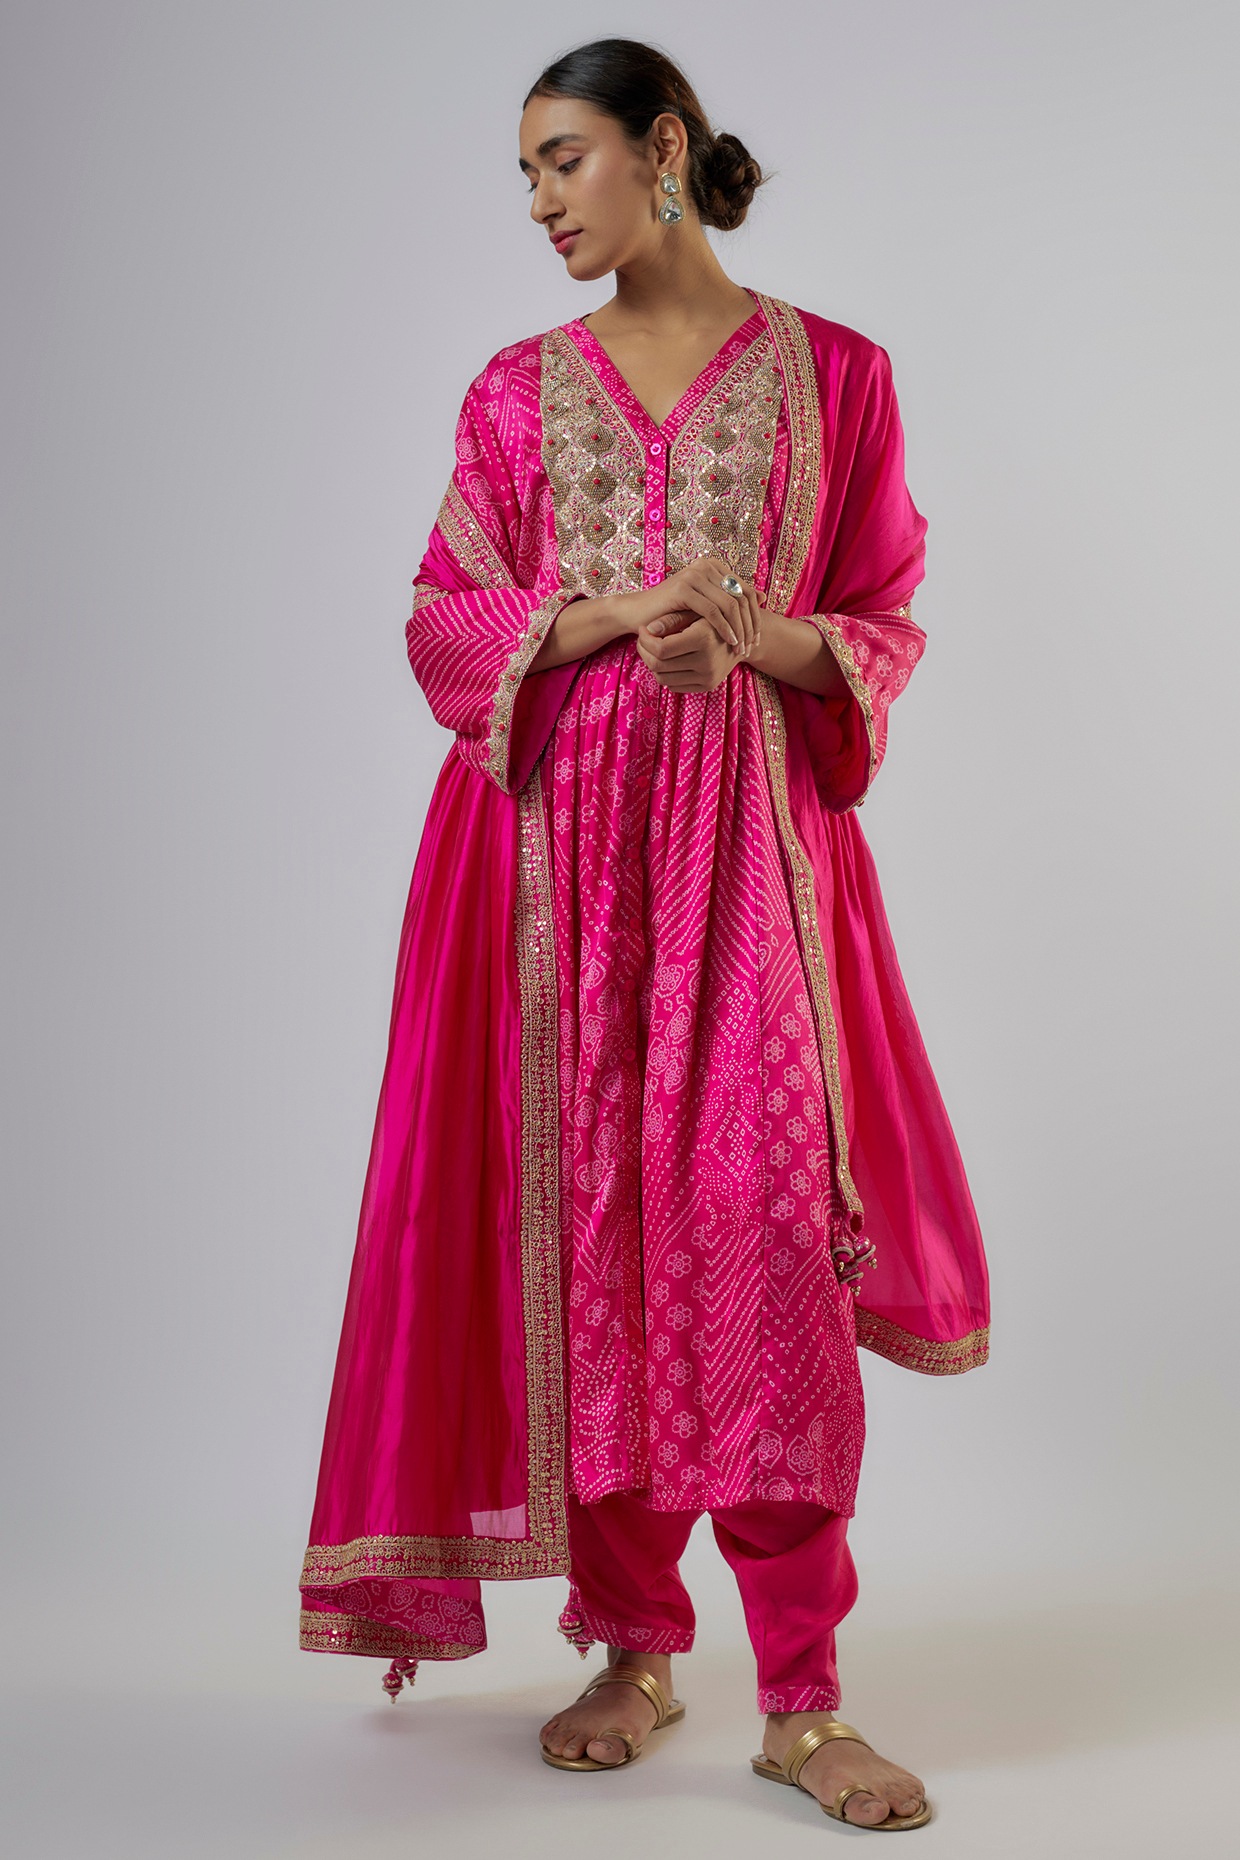 Comfy cotton bandhani kurtas to beat the heat. | Long kurti designs,  Bandhani dress, Kurta neck design